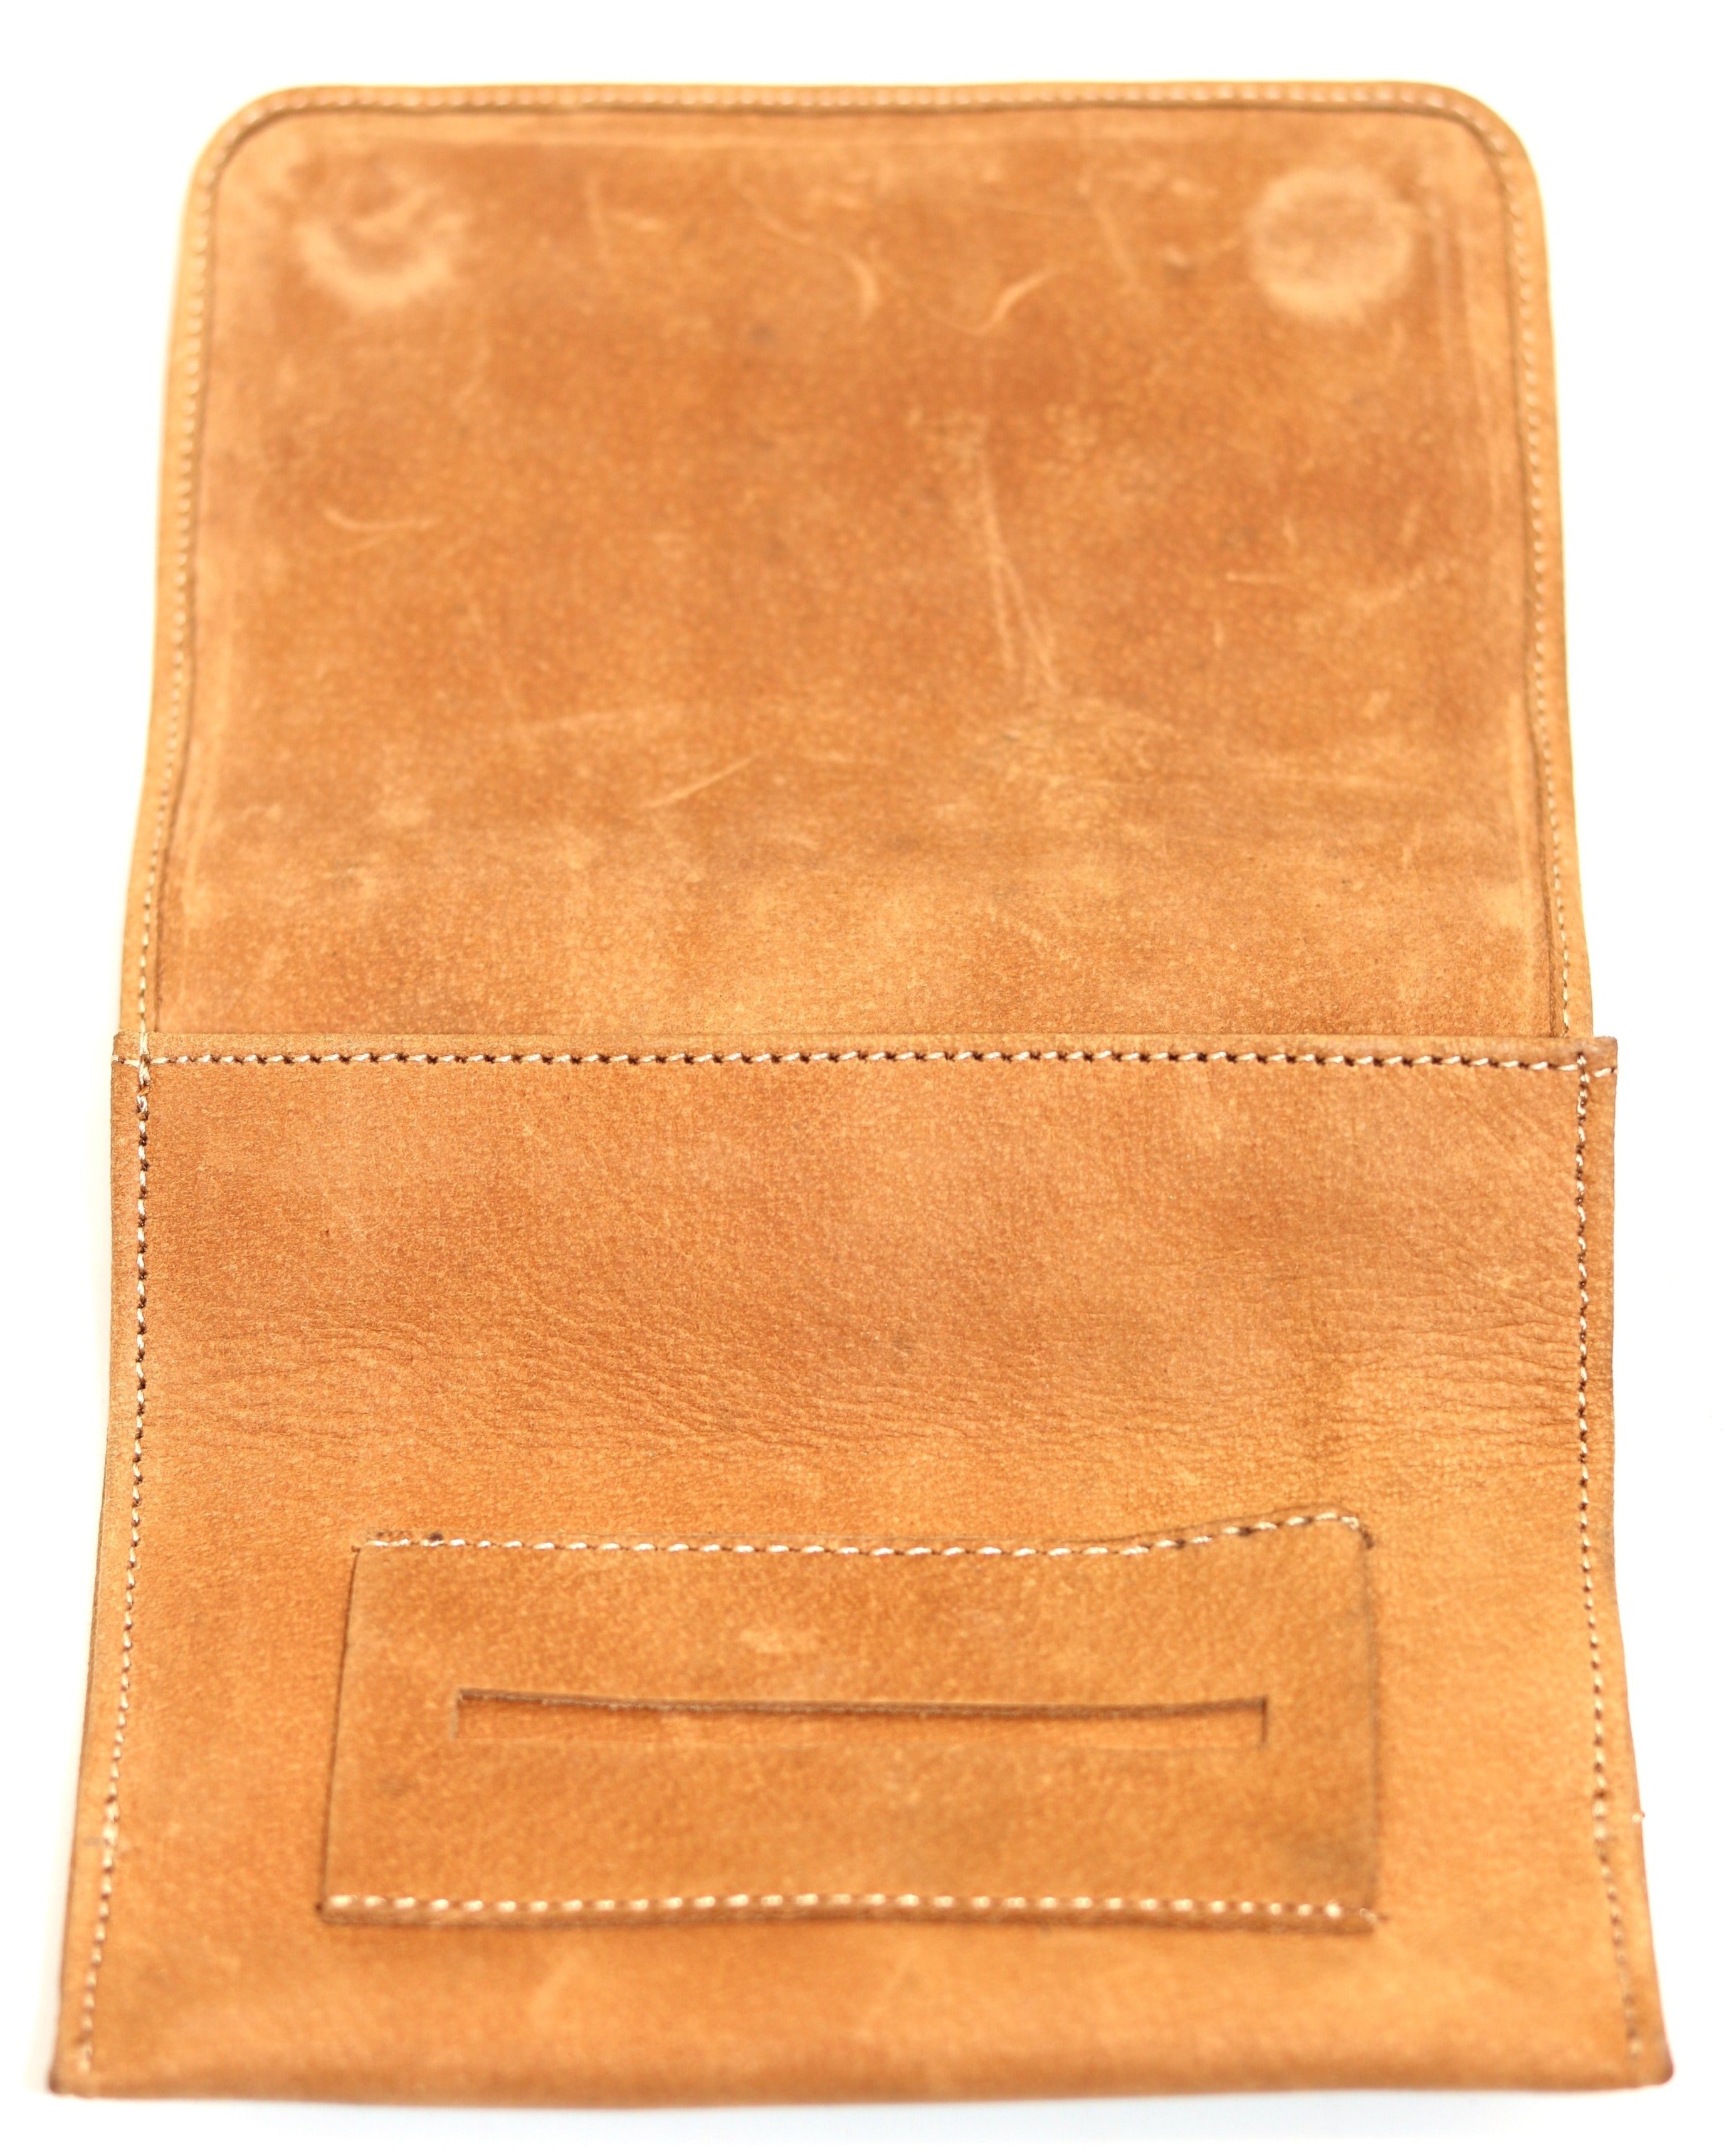 tan tobacco pouch open daniel leather